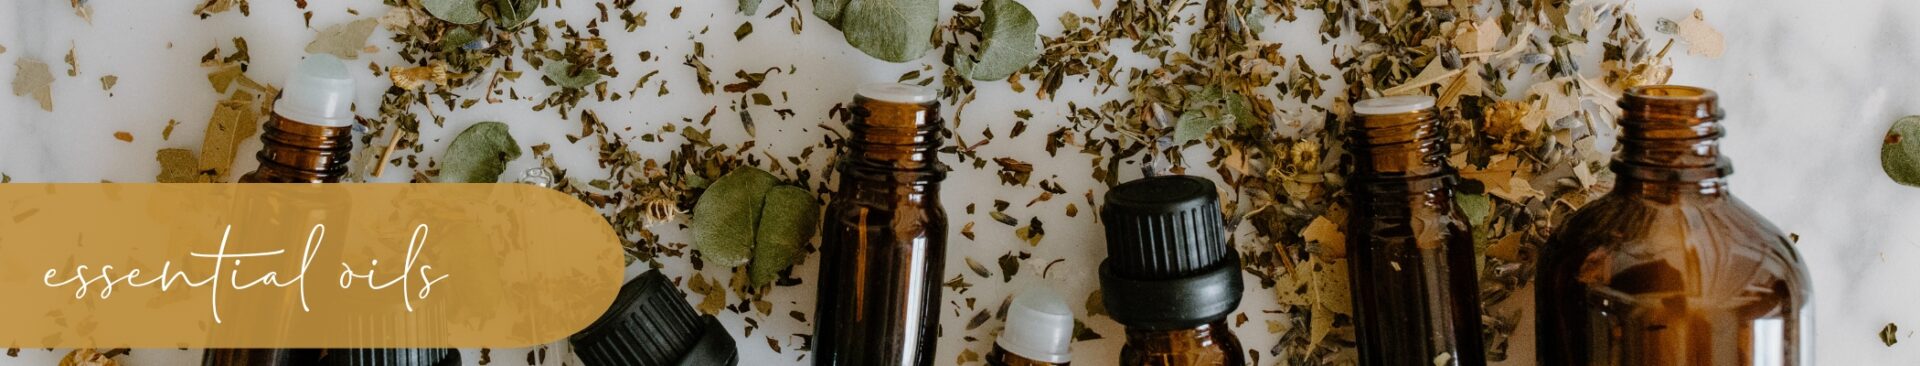 Plant_Remedies_H1. Essential Oils